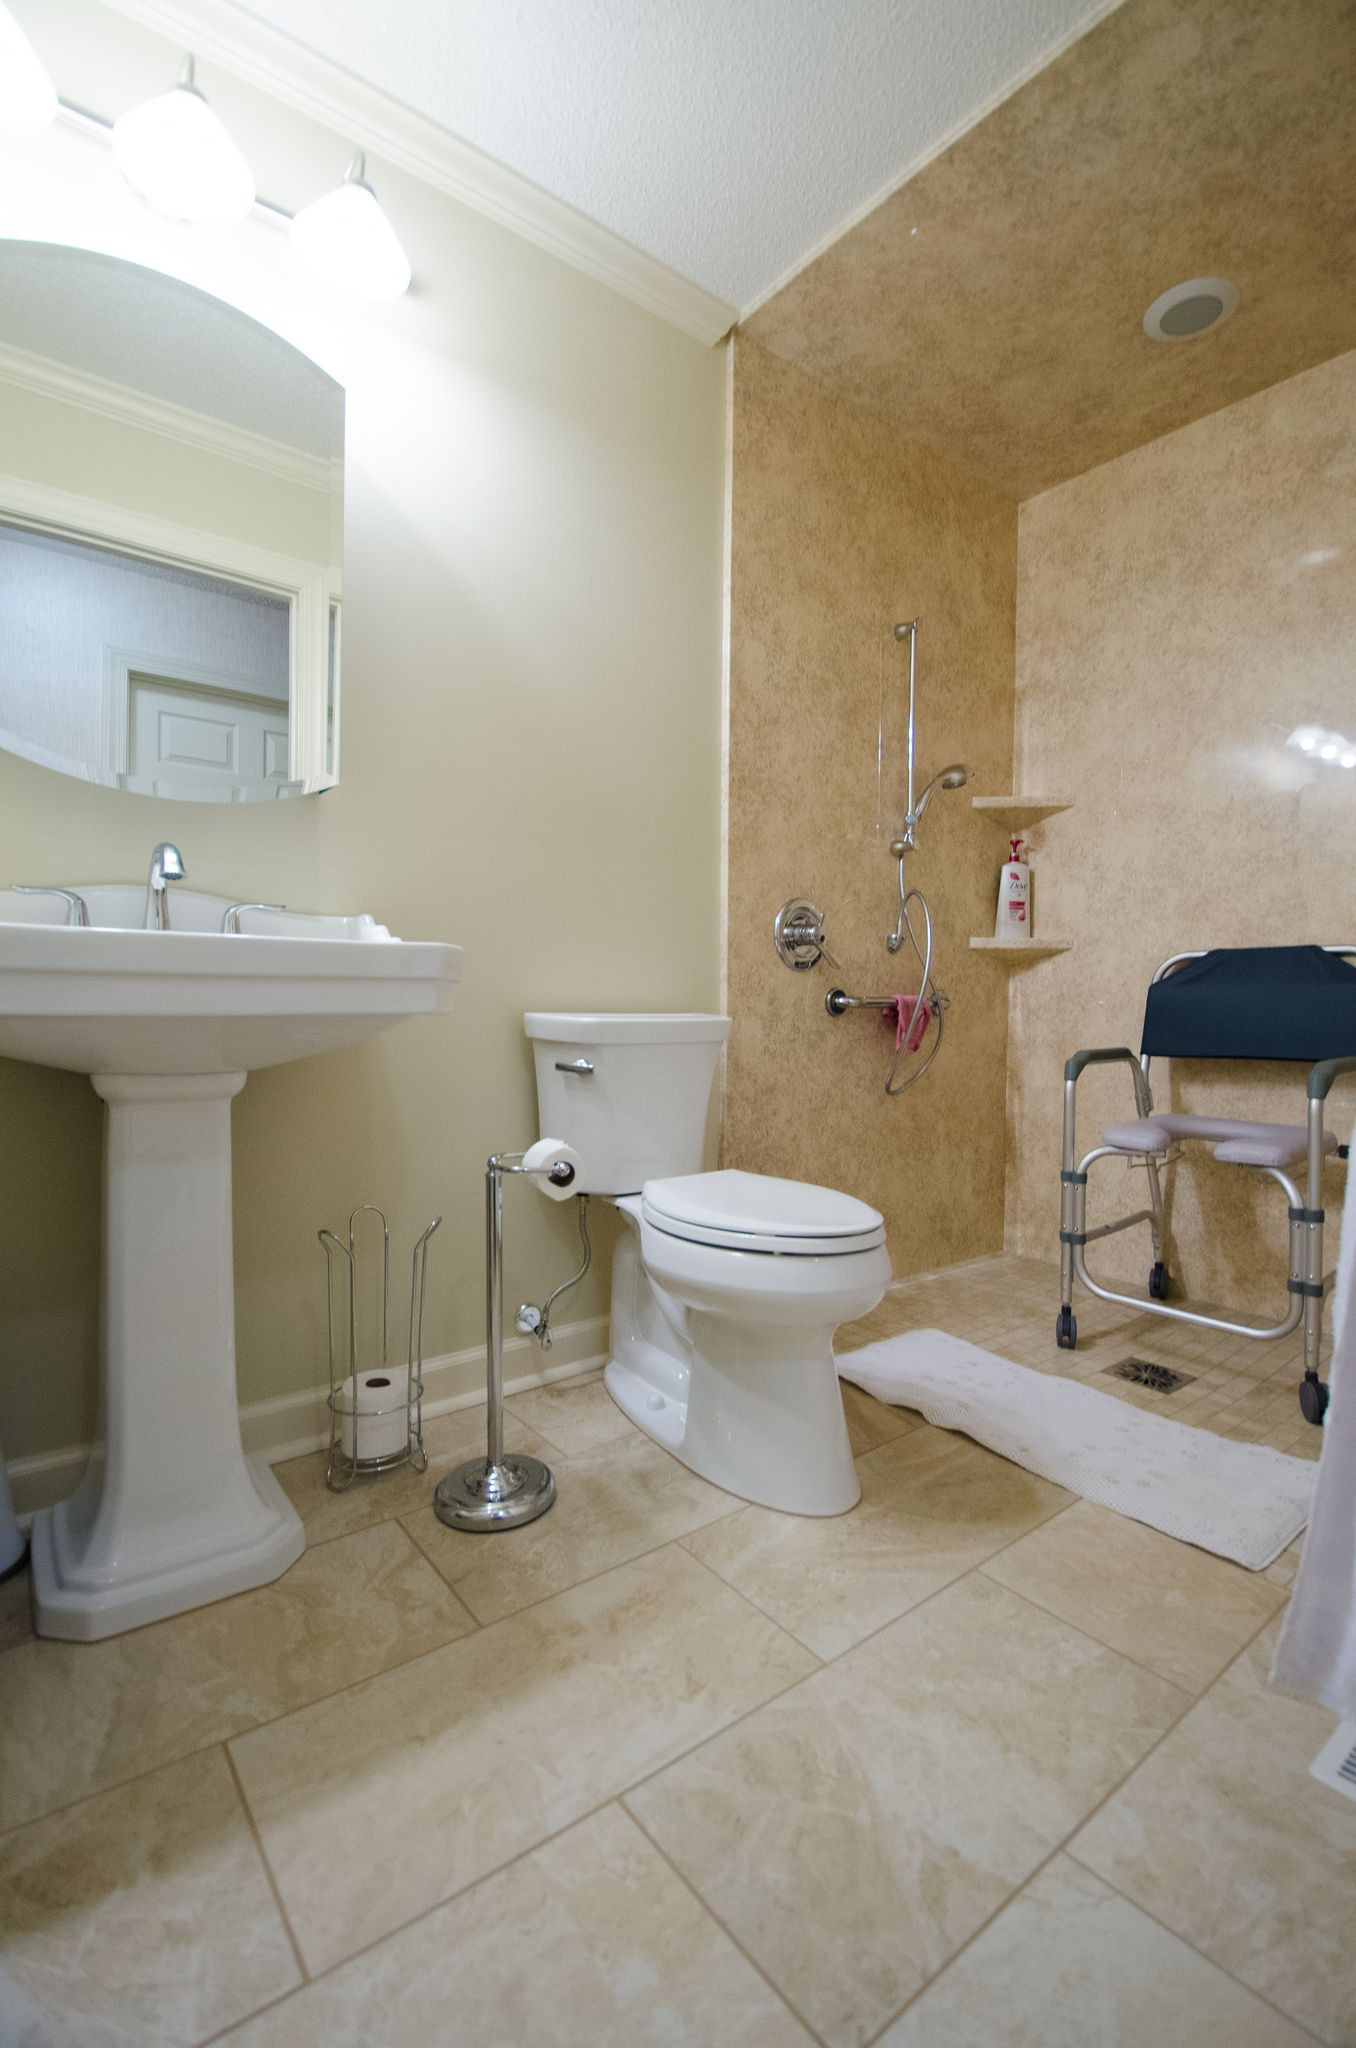 Handicapped Bathroom Design Awesome 27 Safe and Accessible Handicap Bathroom Design for